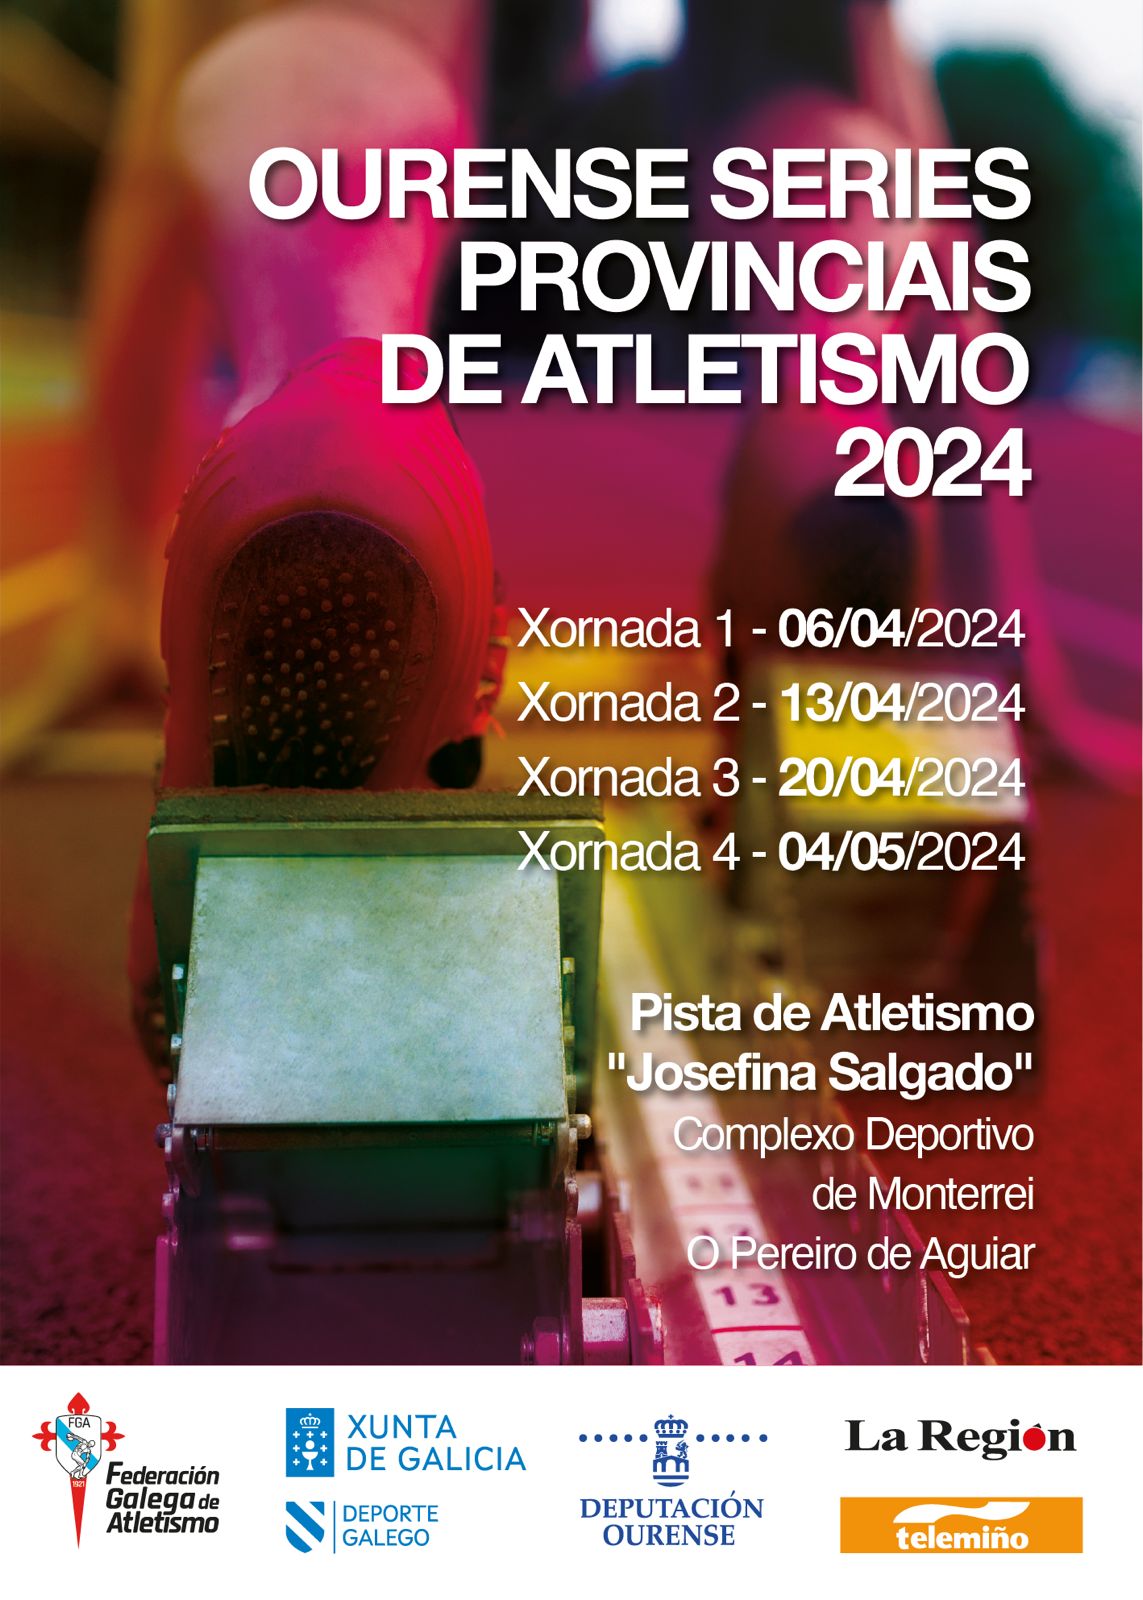 Ourense Series Provinciais de Atletismo 2024 – Xornada 2